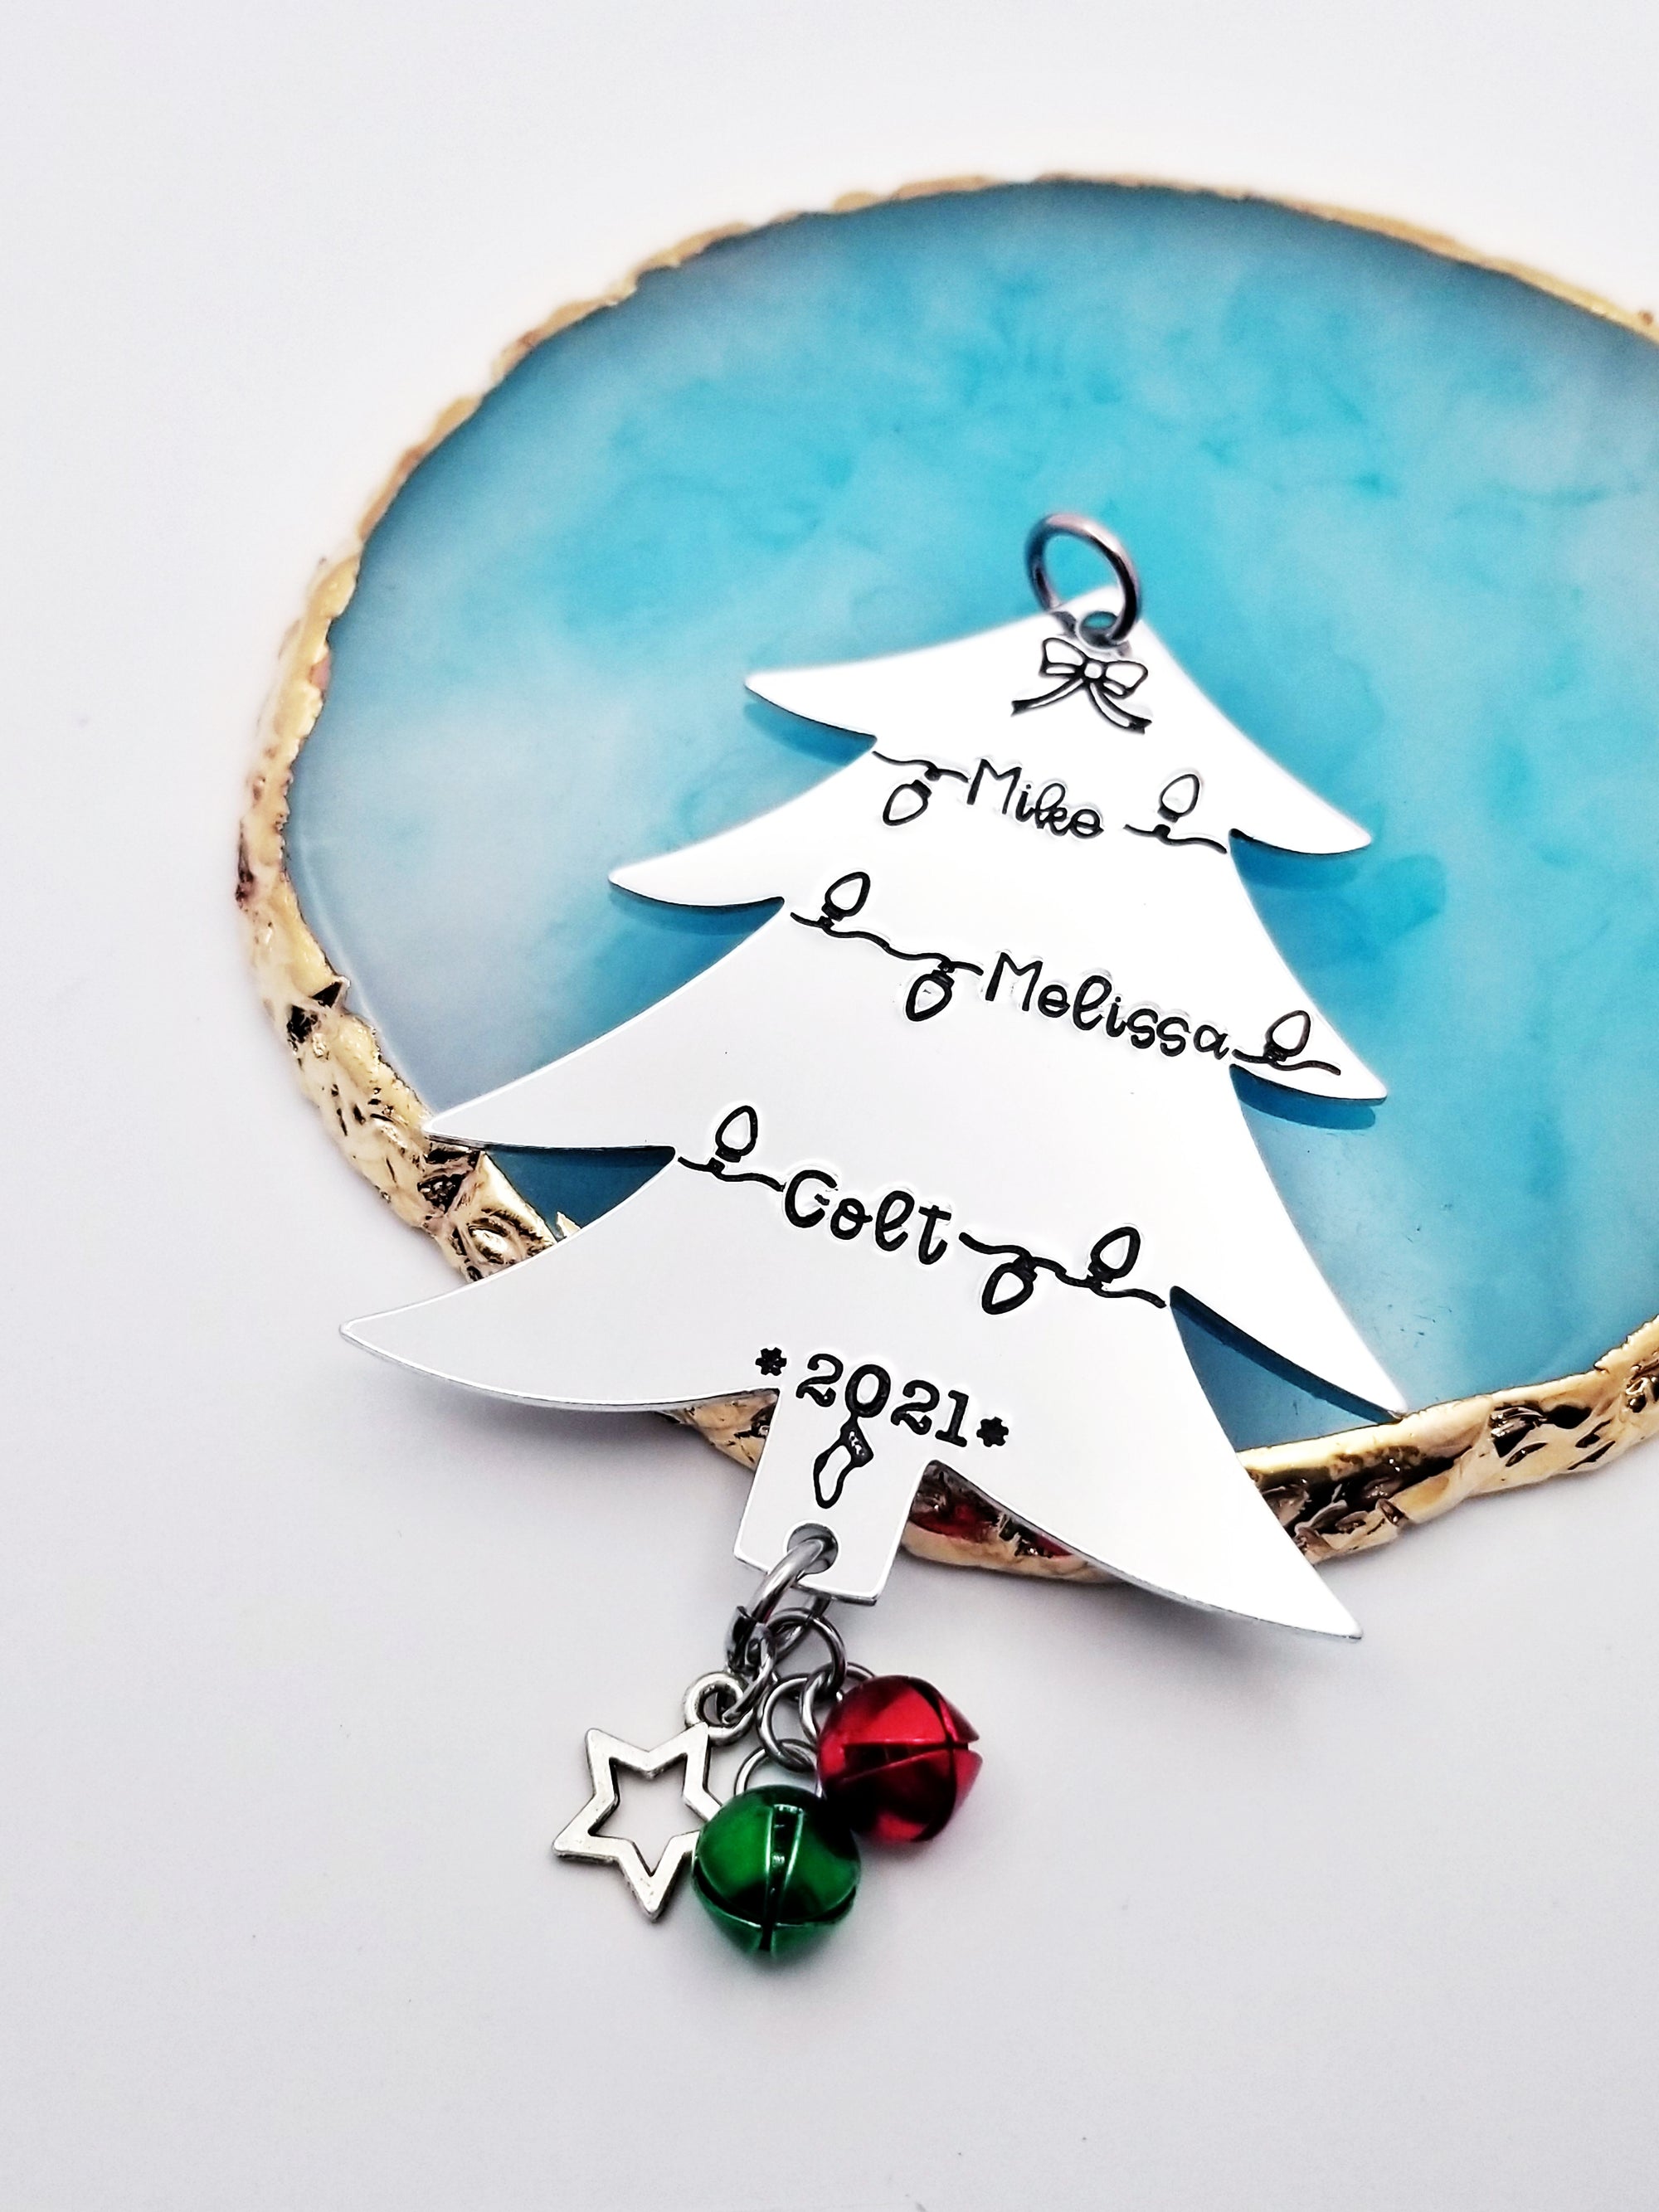 Yearly Family Christmas Ornament, Handmade Ornament, Personalized Christmas Ornament, Funny Ornament Gift